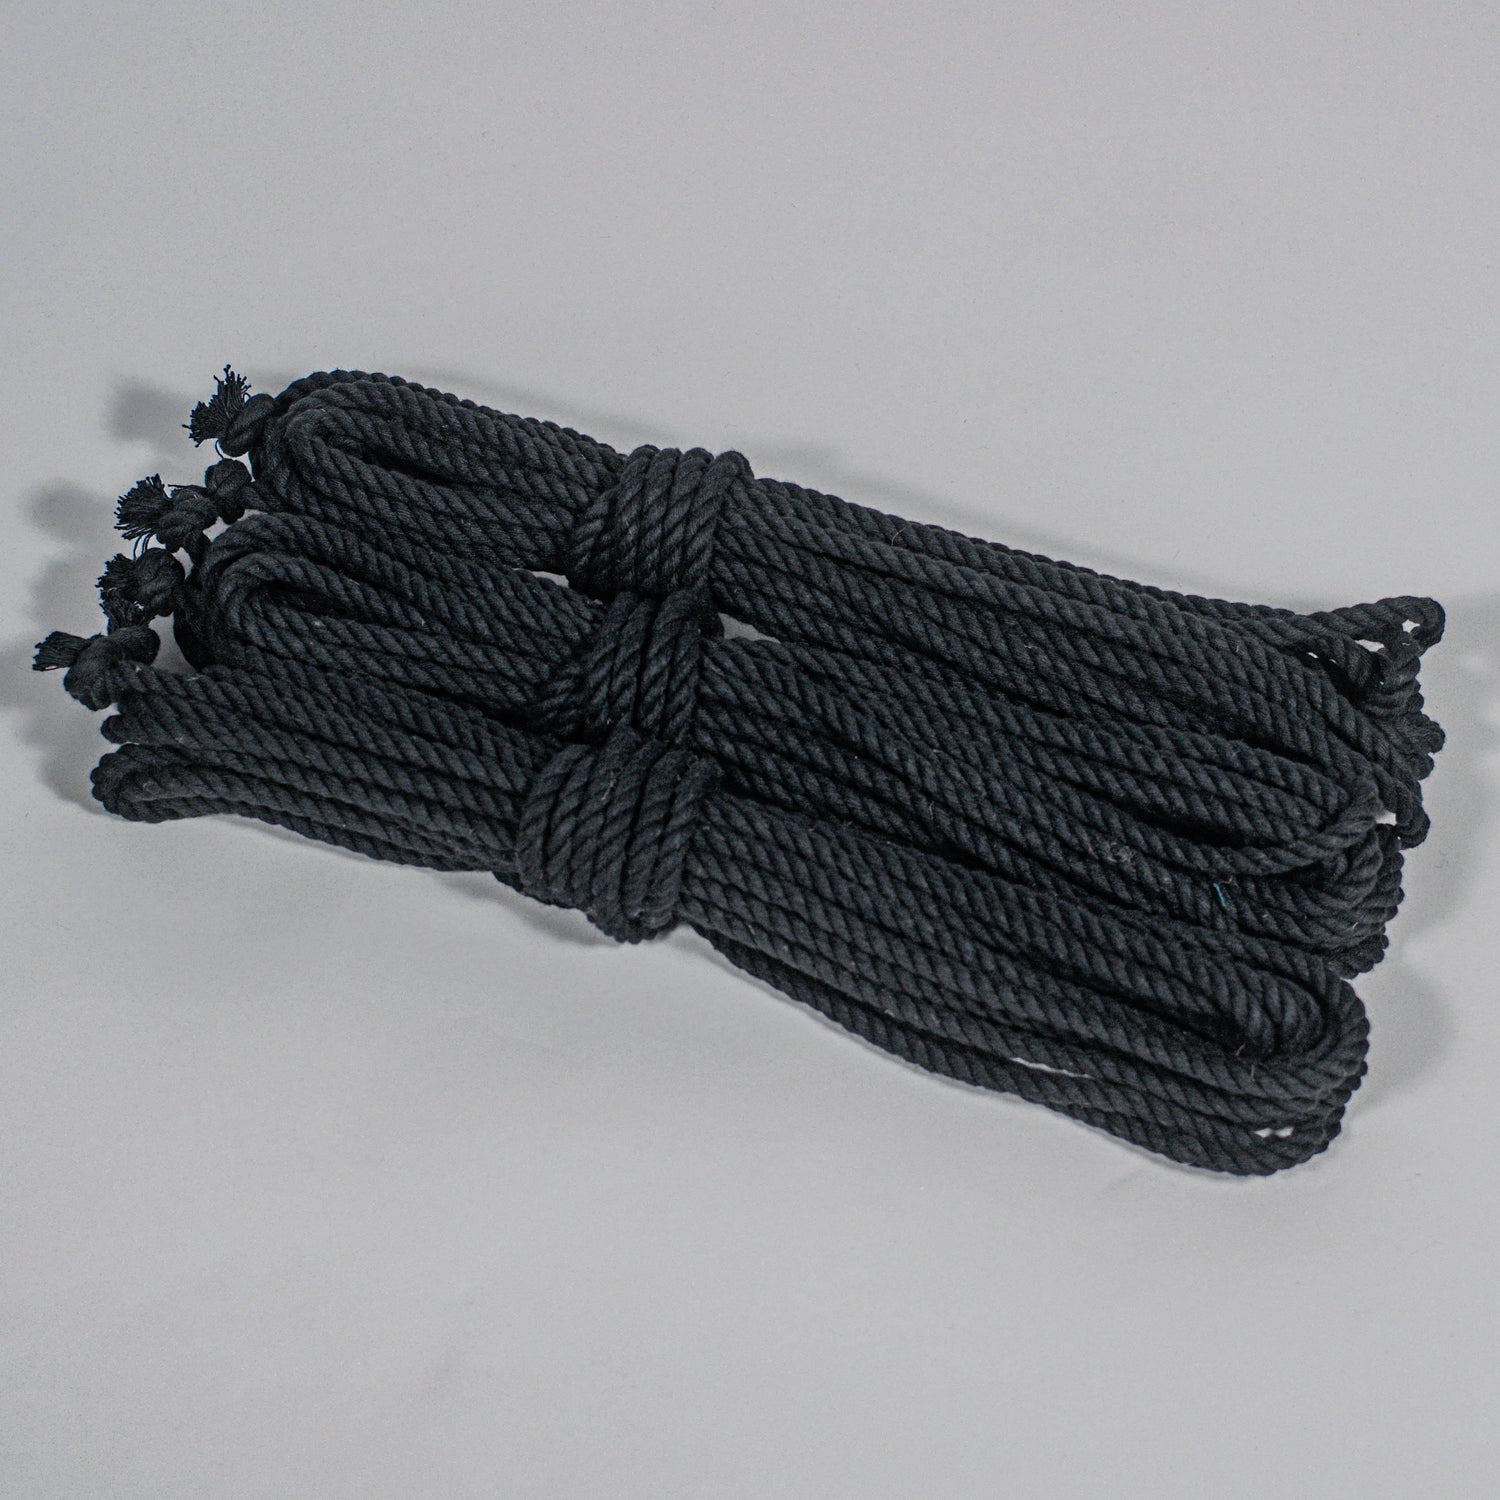 Cotton Play Ropes Shibari Rope black Bundle of 3 